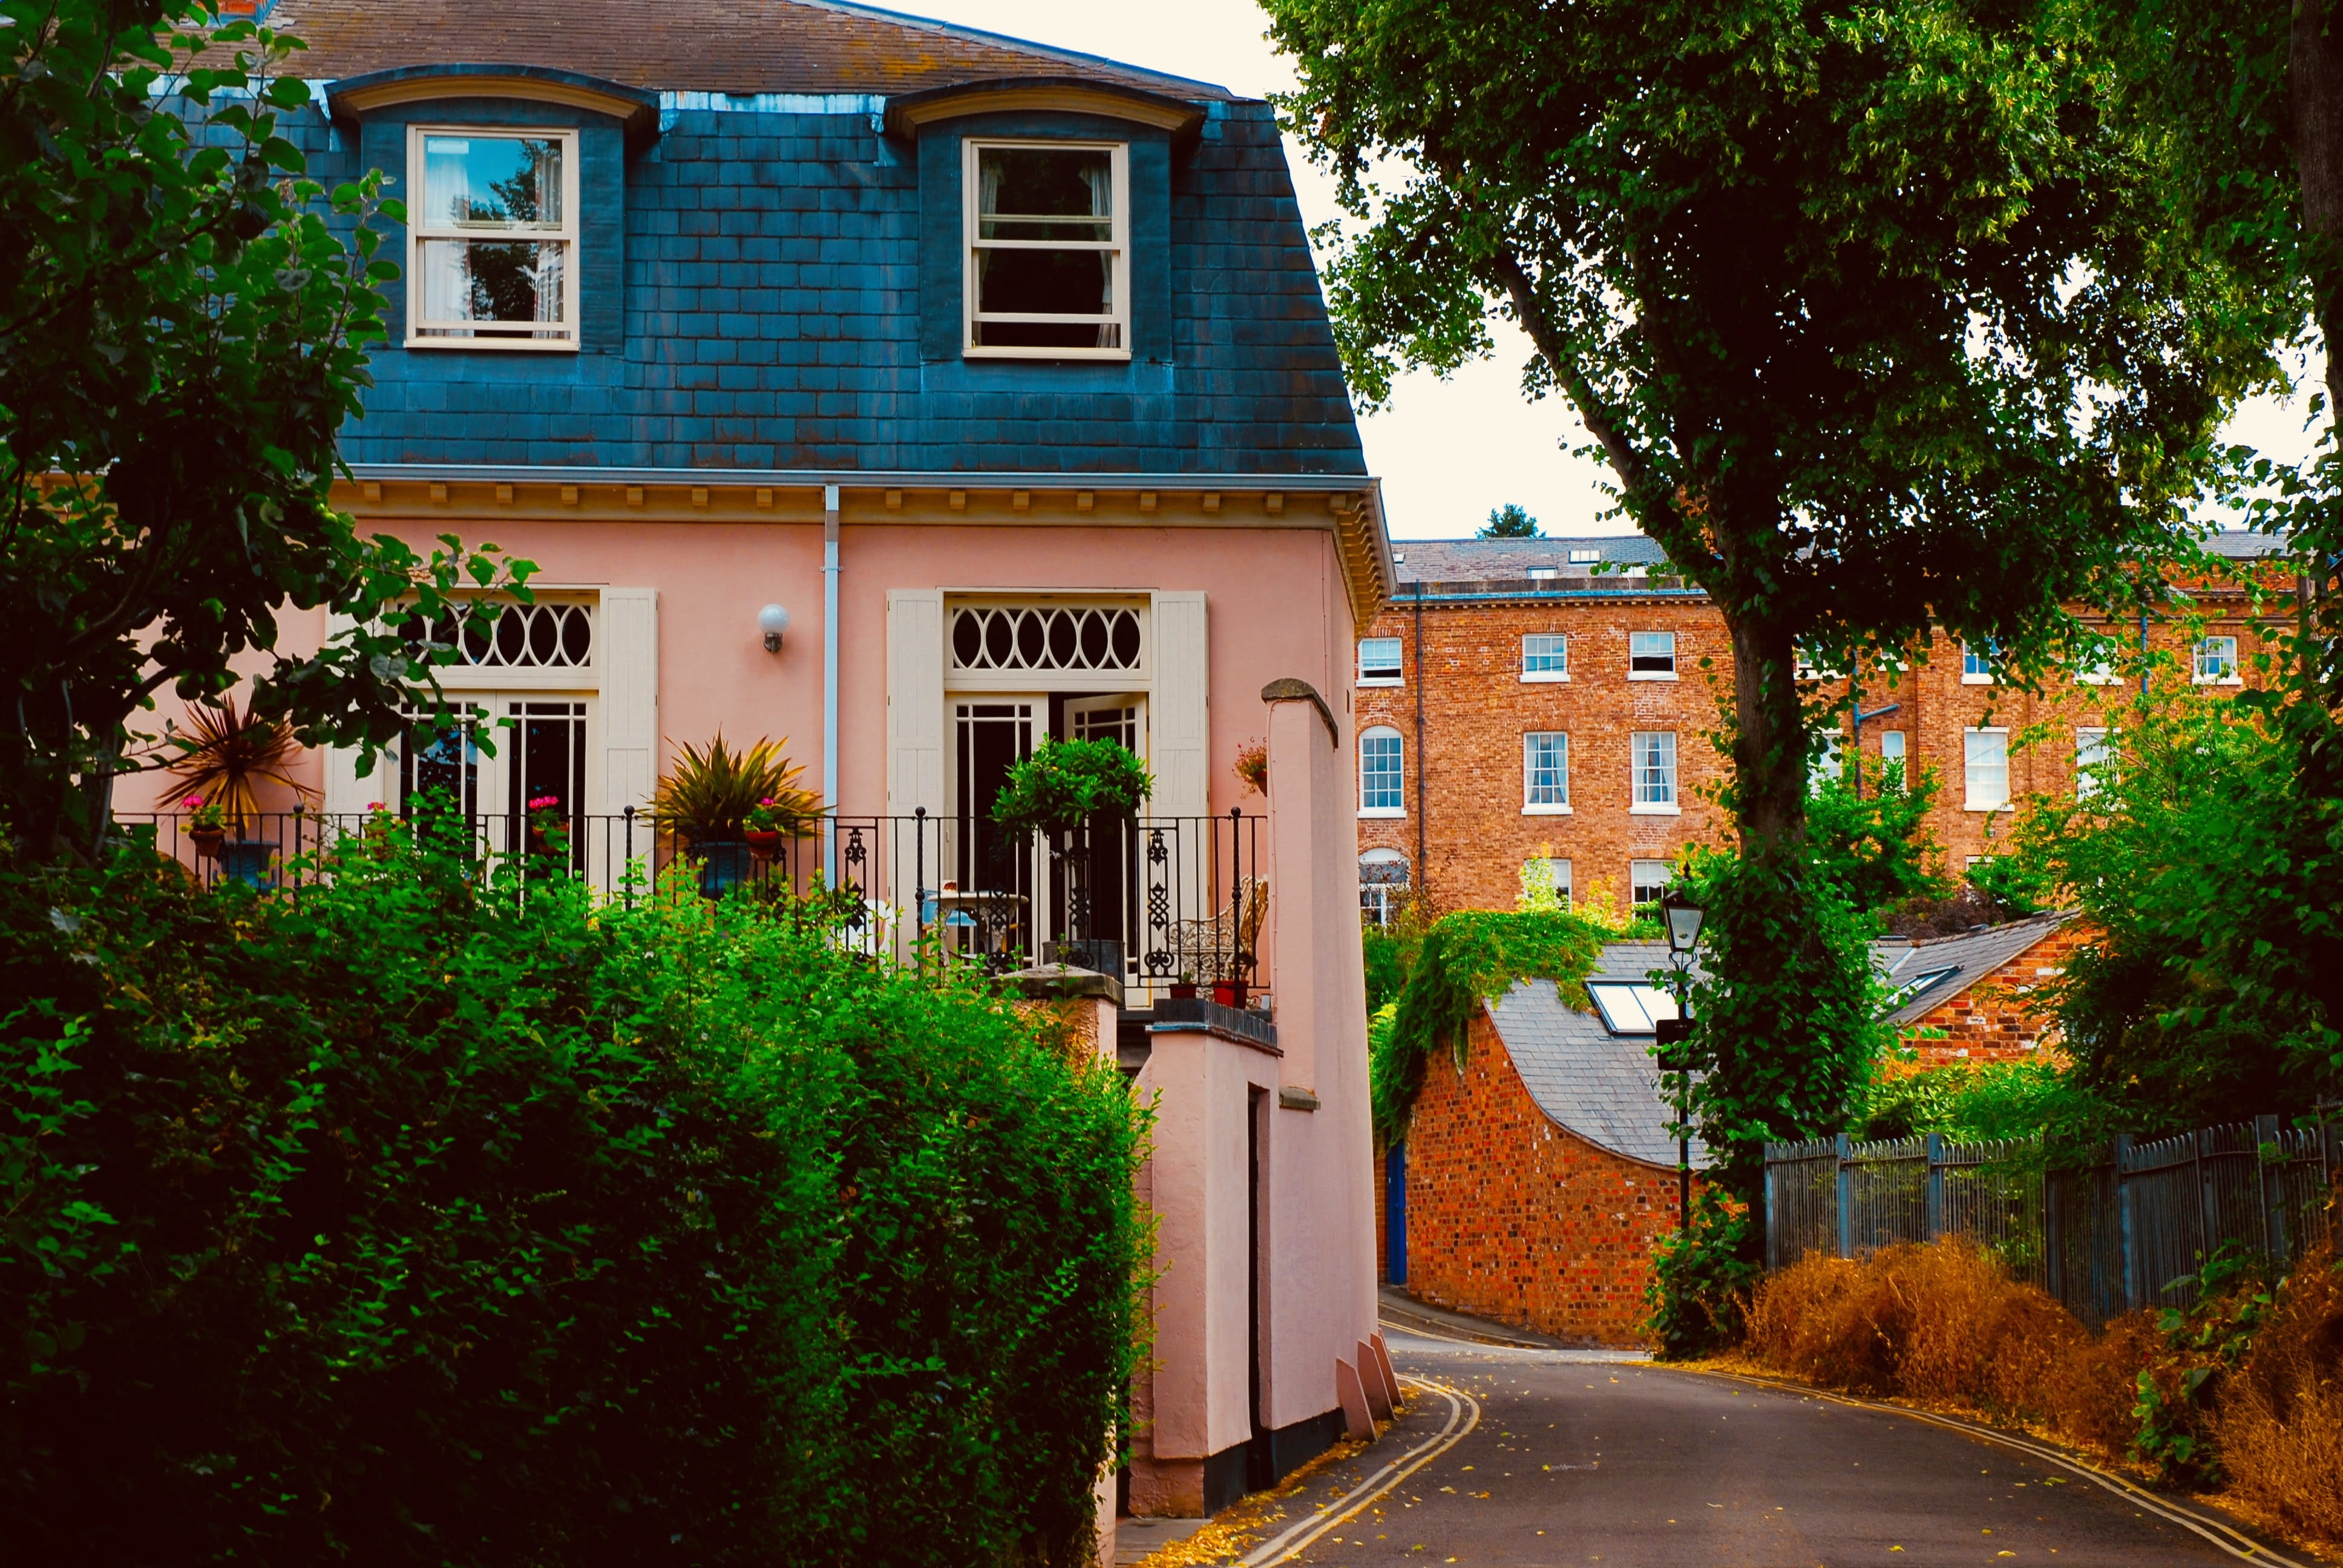 shrewsbury, united kingdom, trees, pink house, red brick, historic